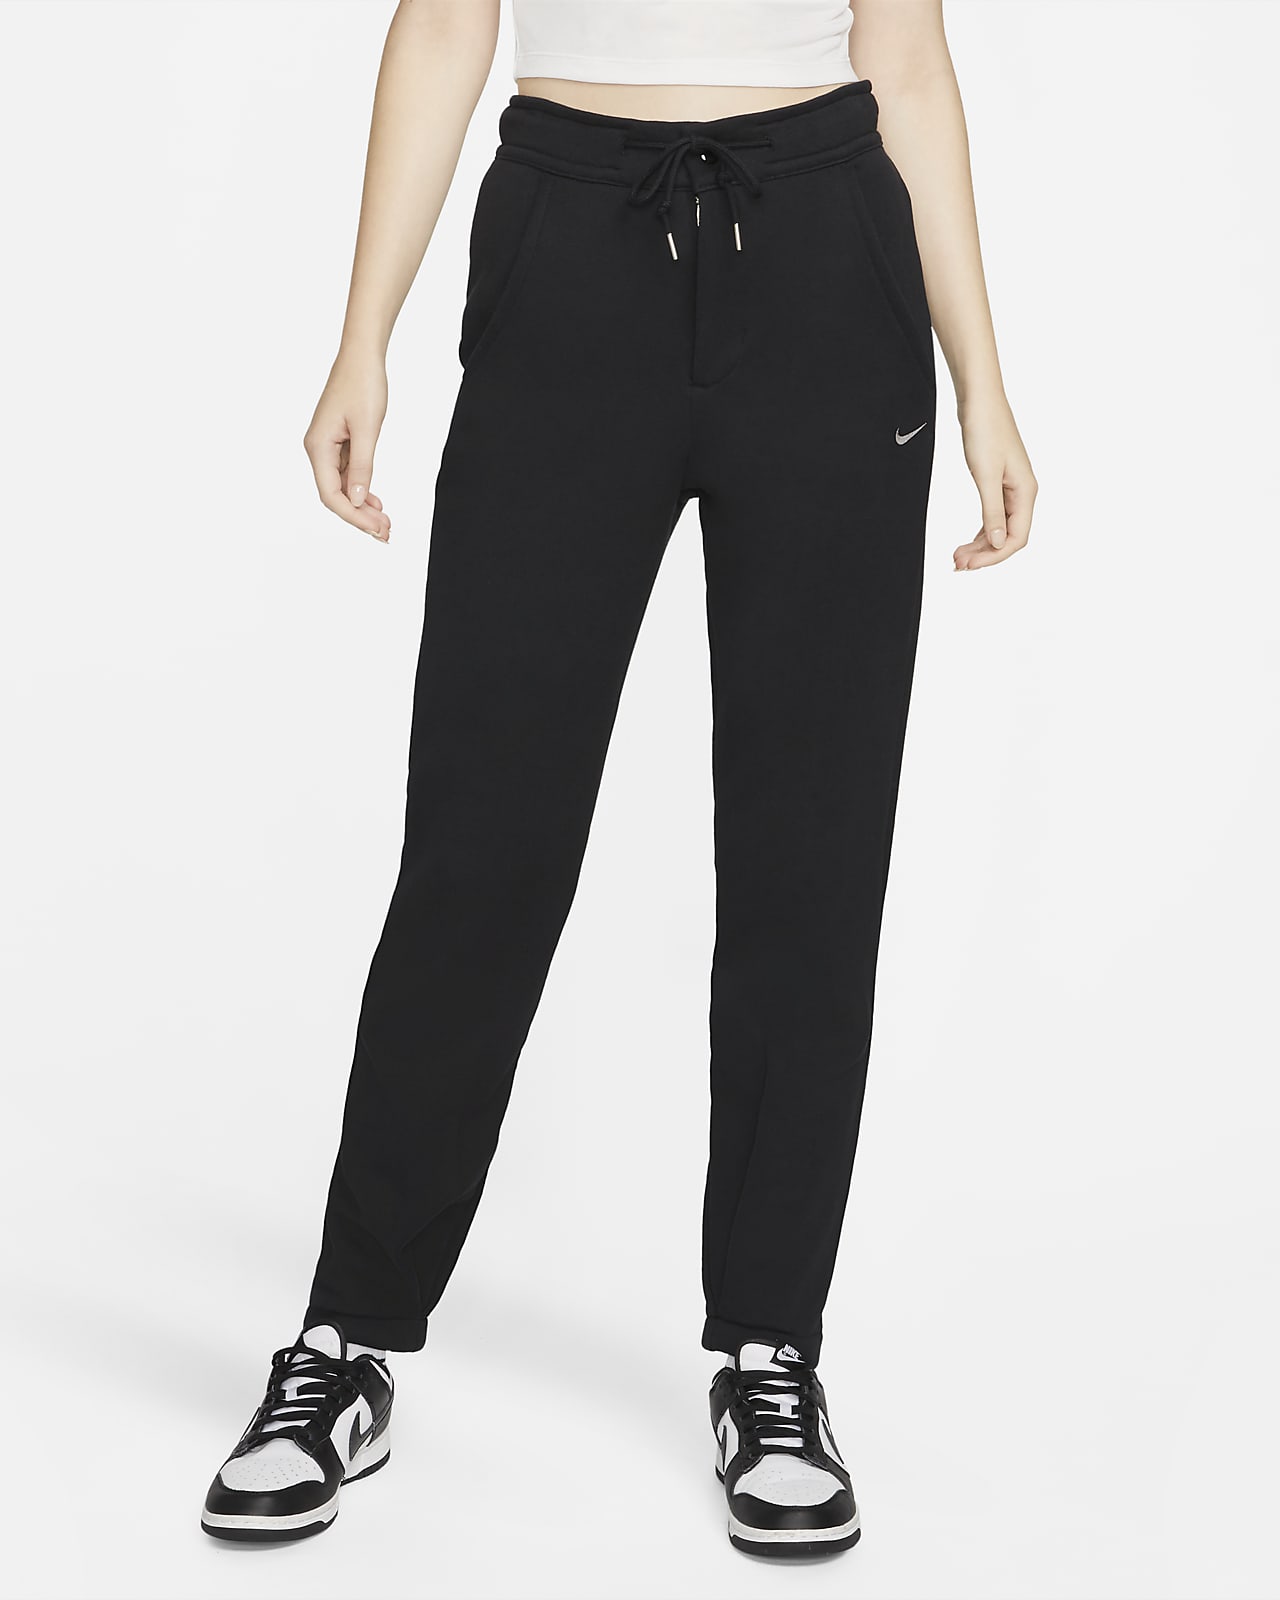 Nike Fleece Sportswear Nike Pants. High-Waisted French Terry Modern Women\'s